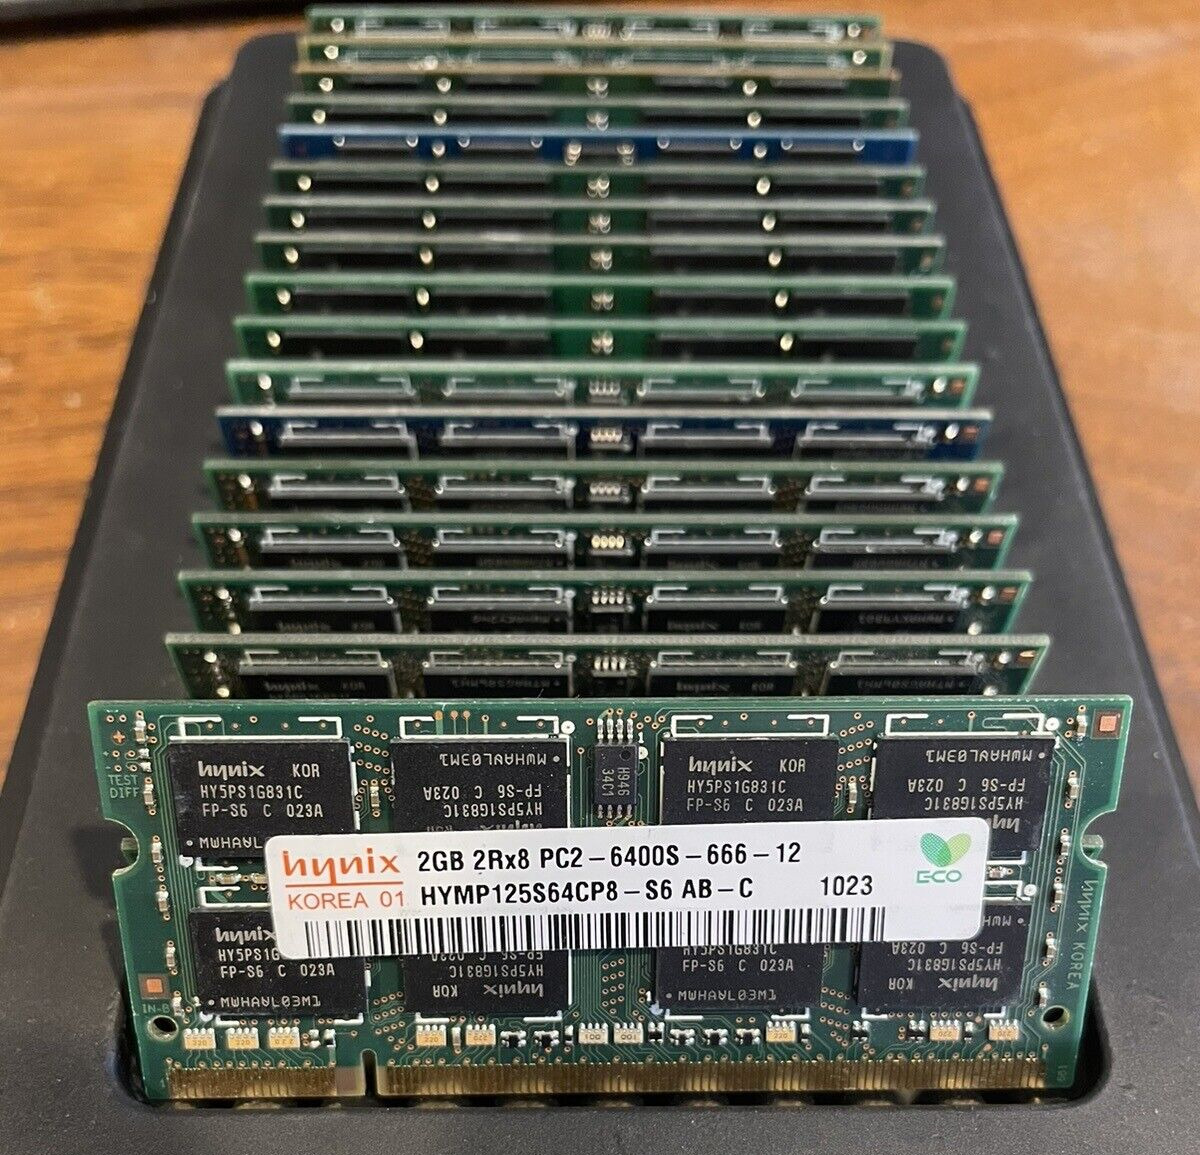 Lot of 50 - Hynix 2GB 2RX8 PC2-6400S DDR2 SODIMM Laptop RAM - TESTED